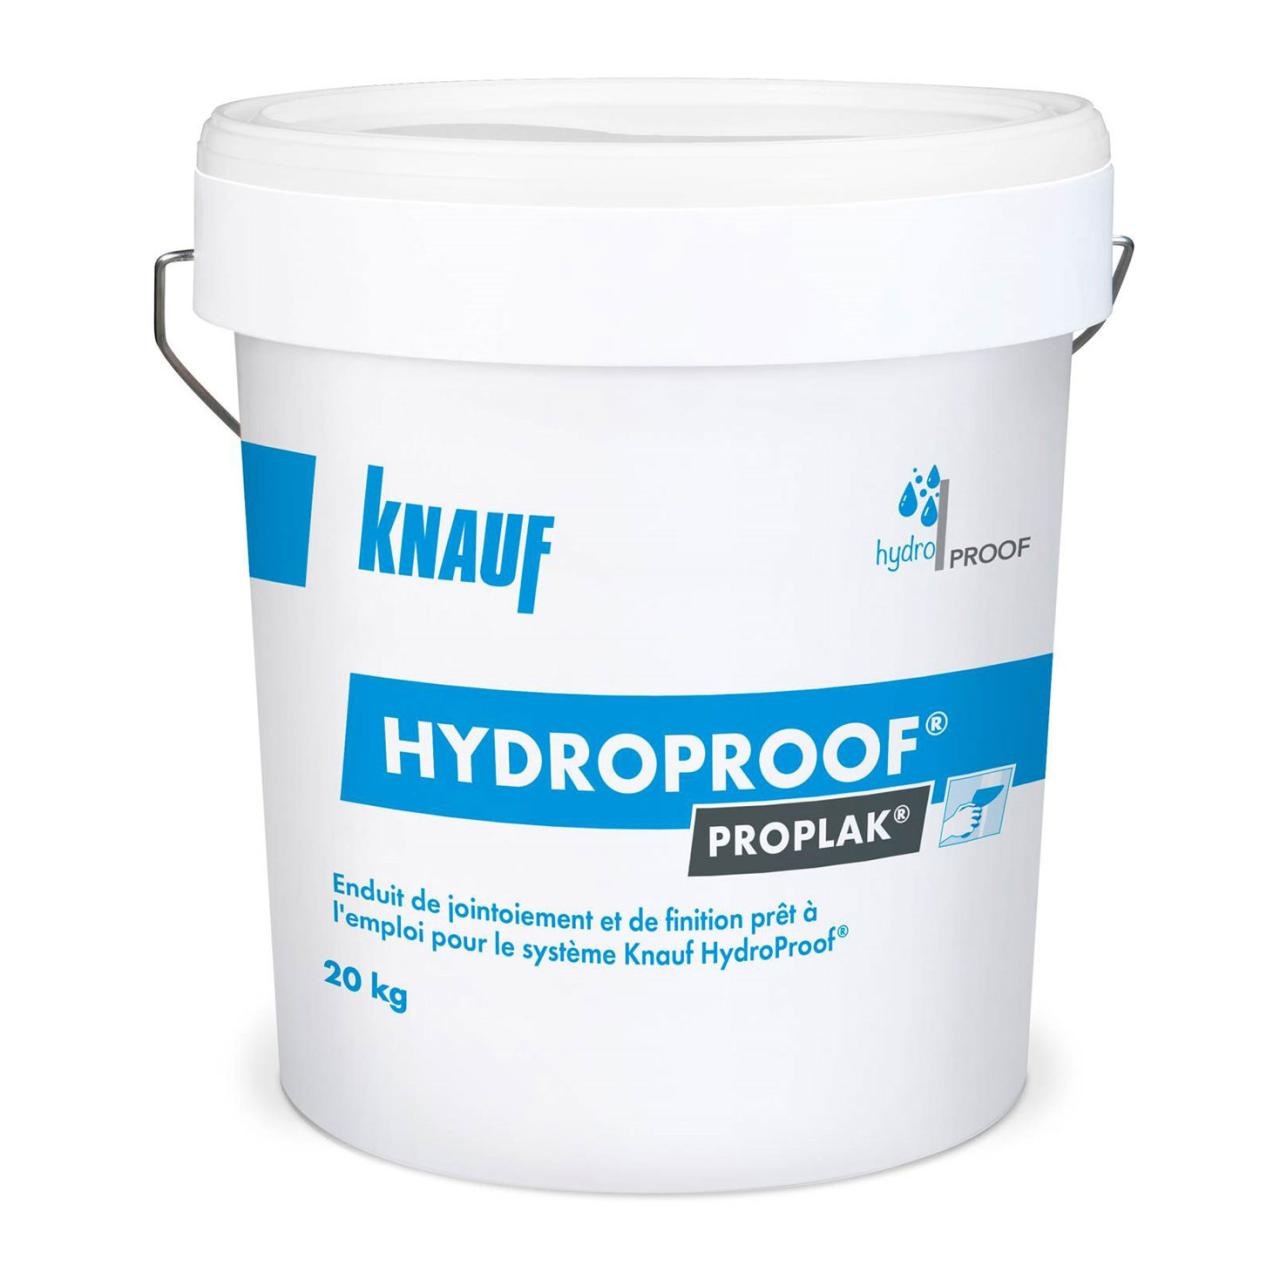 enduit-a-joint-proplak-hydroproof-20kg-seau-knauf-0